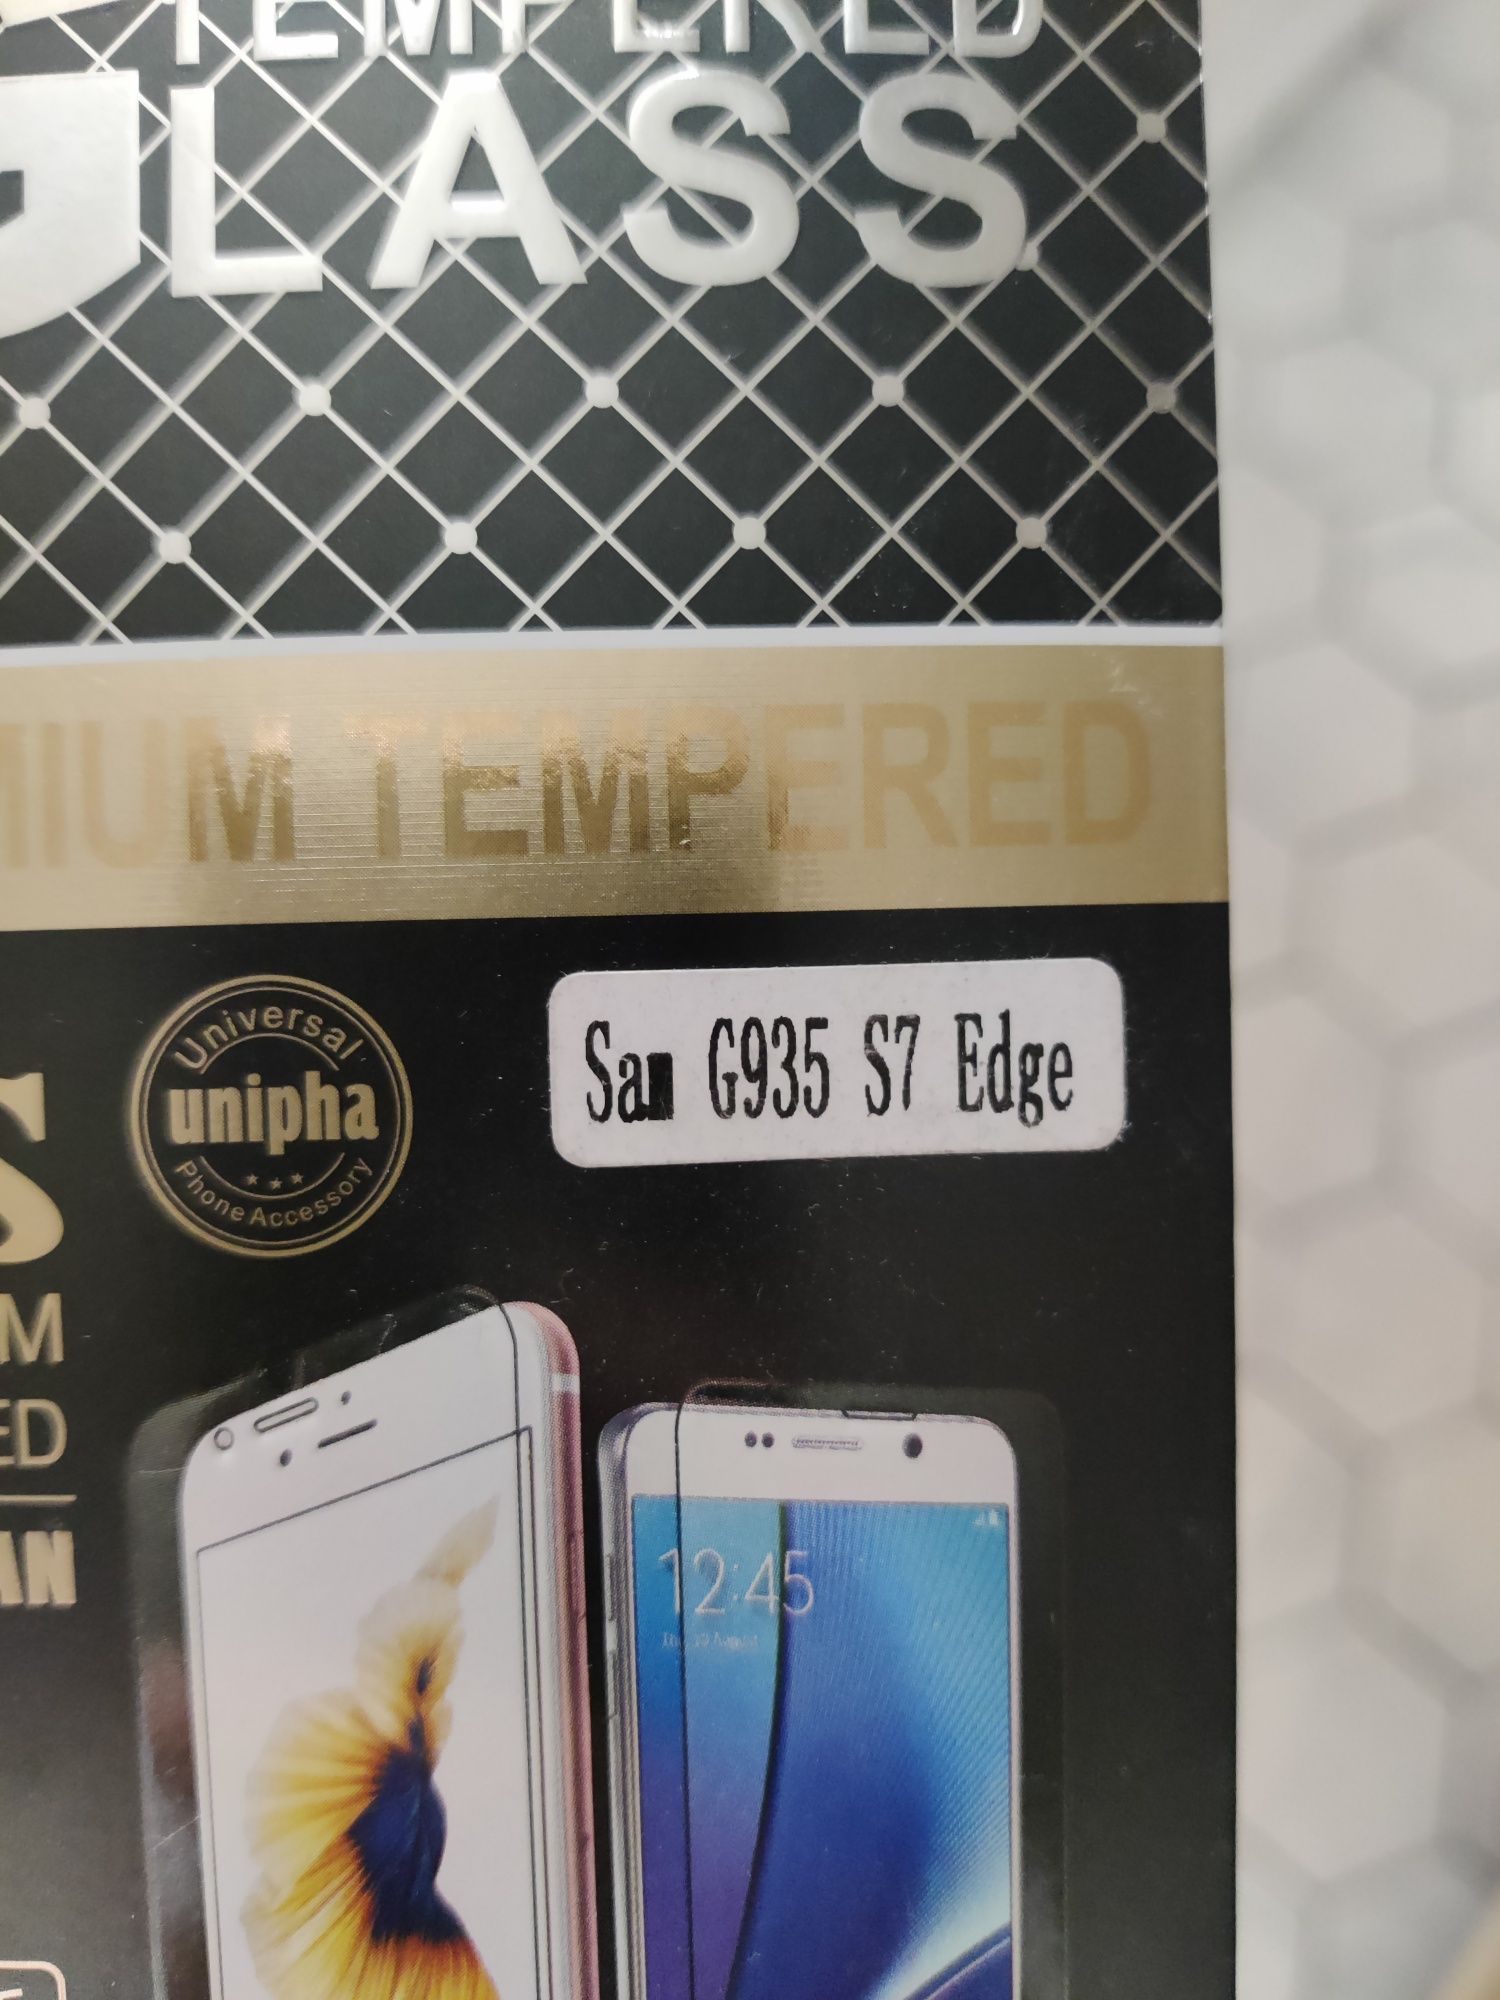 Szkło ochronne Samsung S7 edge nowe